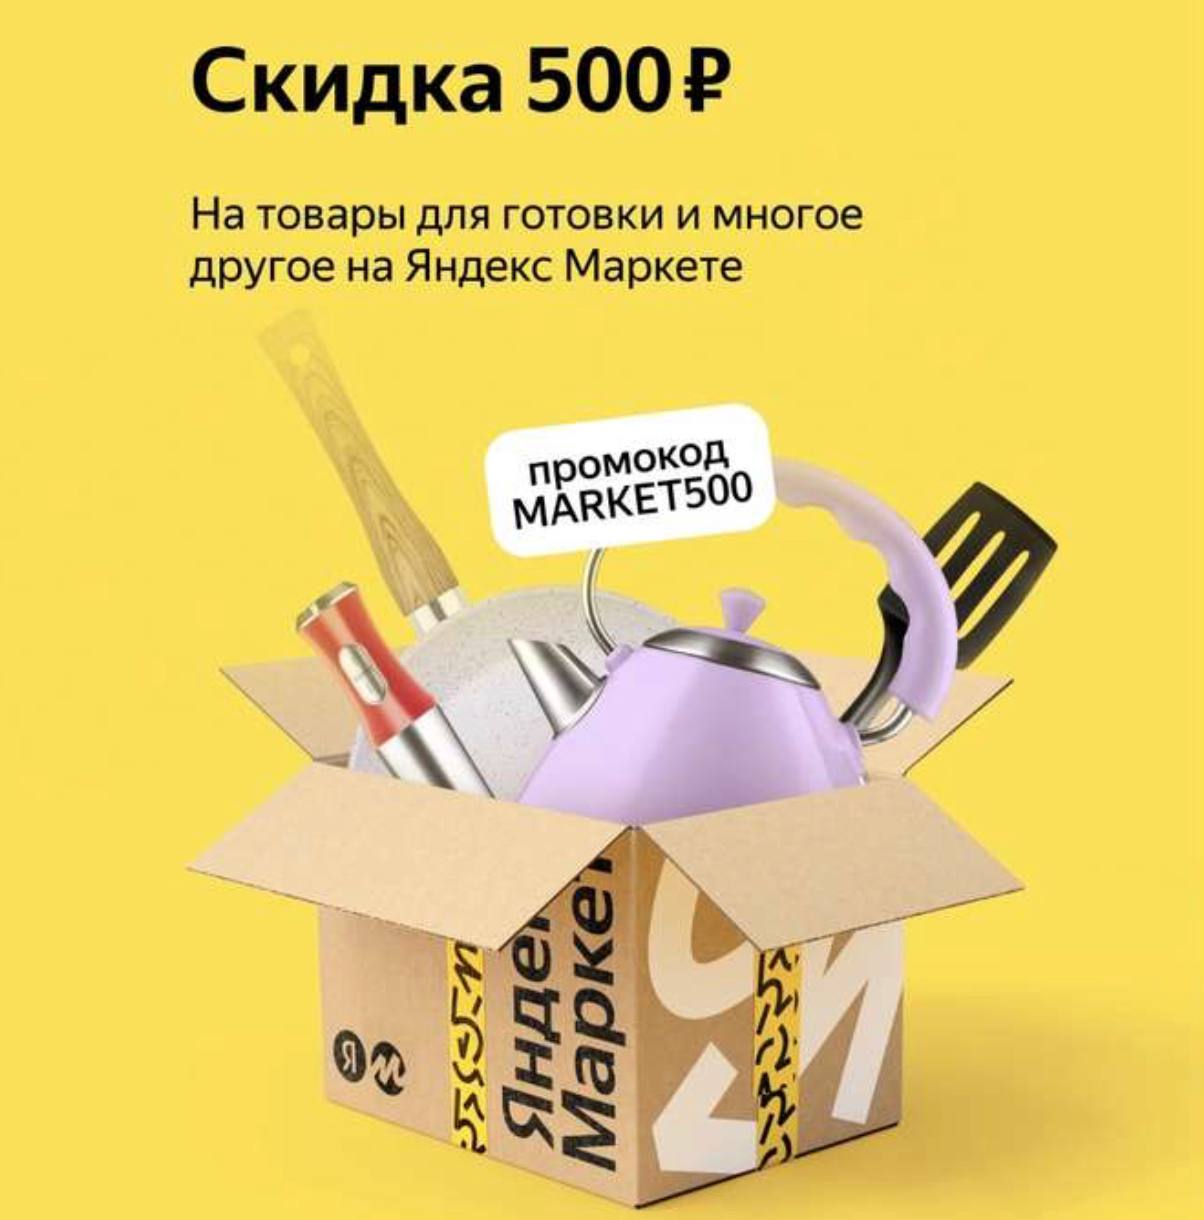 Яндекс Маркет промокод 500 рублей